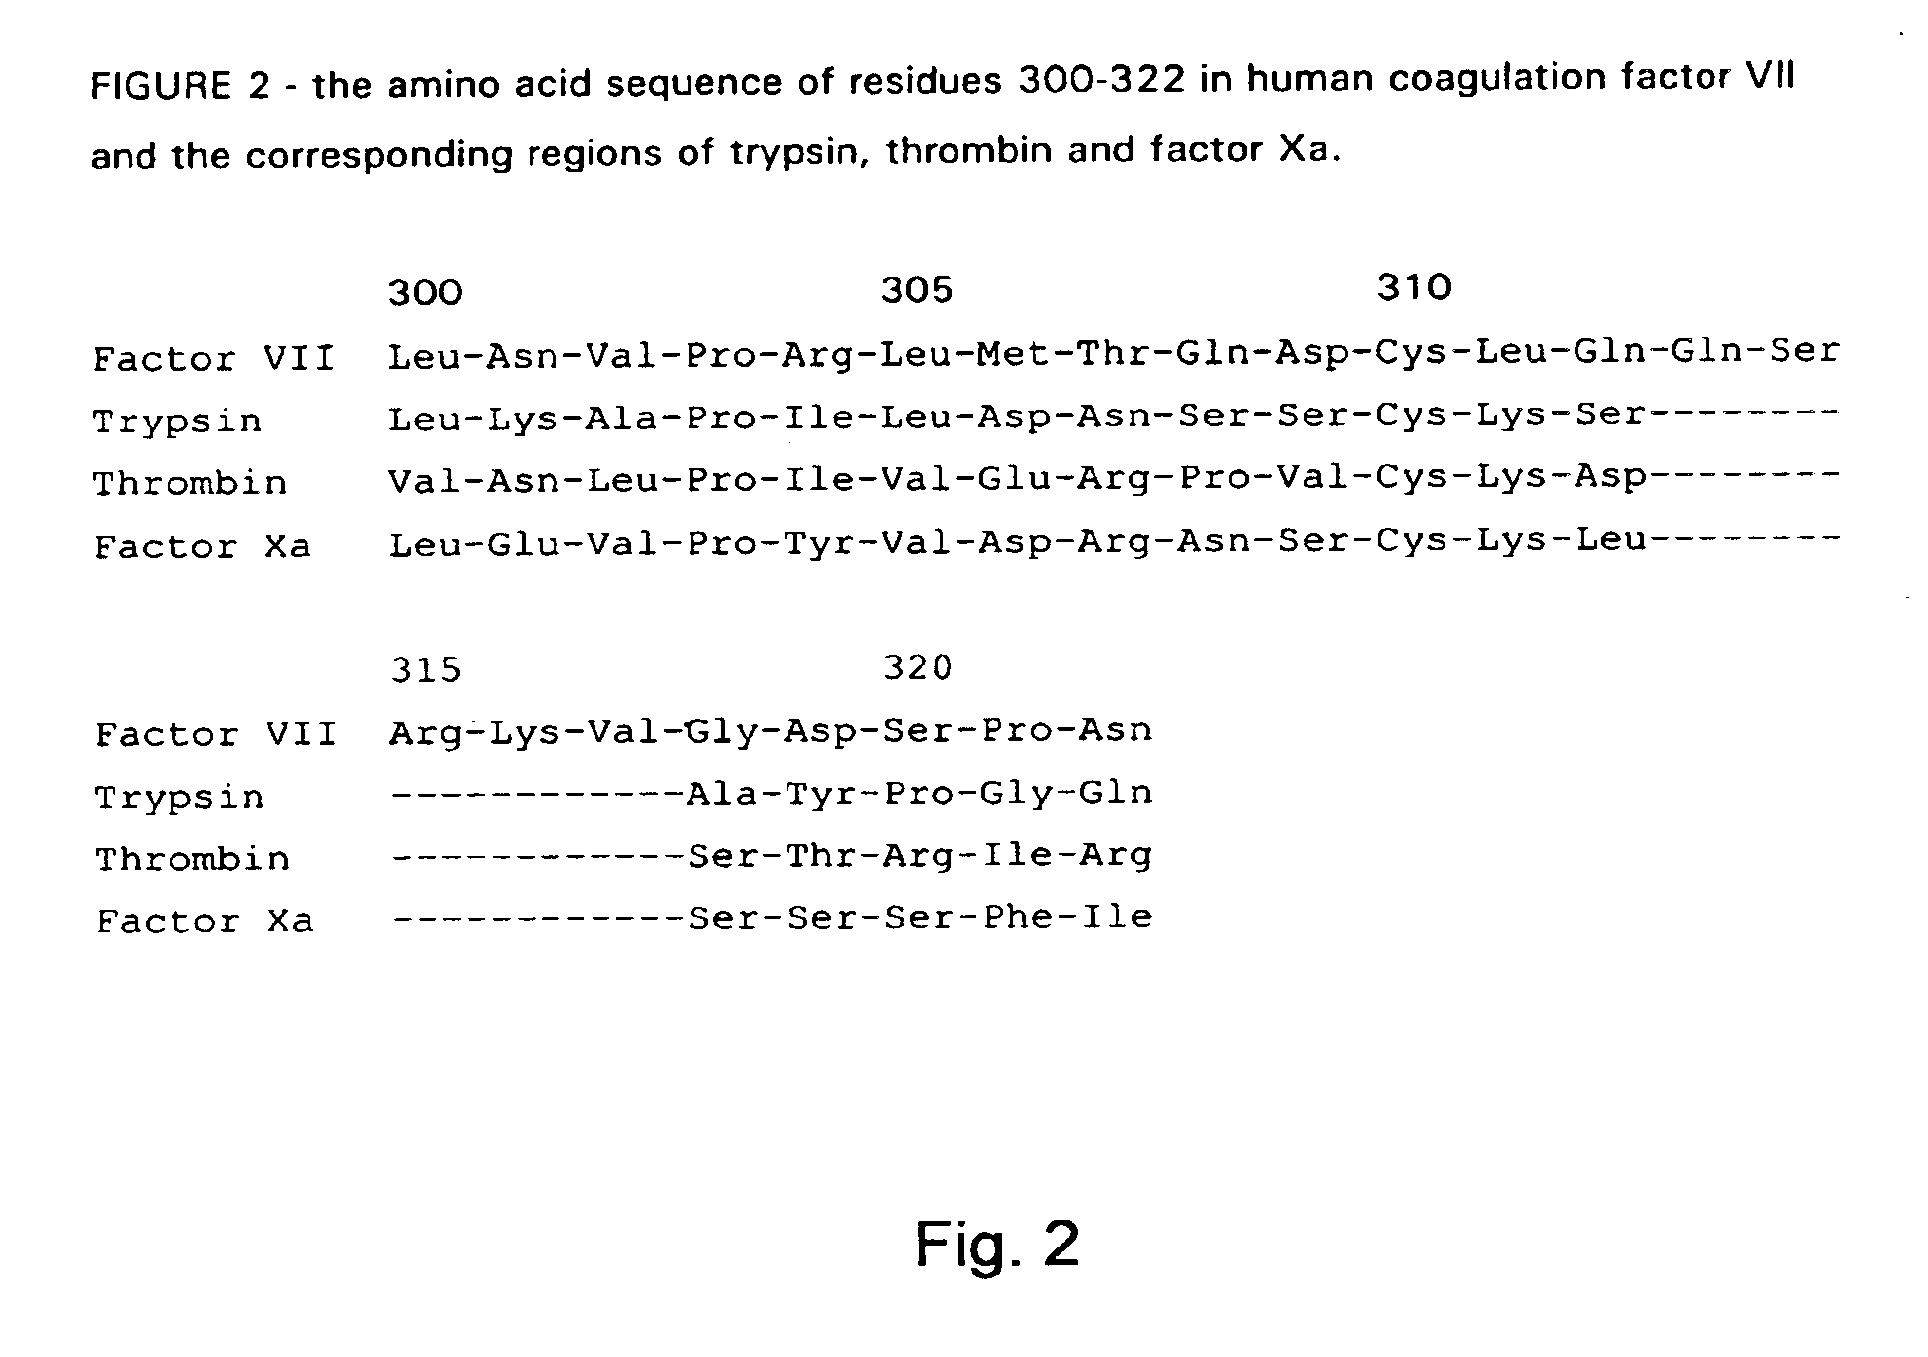 Human coagulation factor VII variants